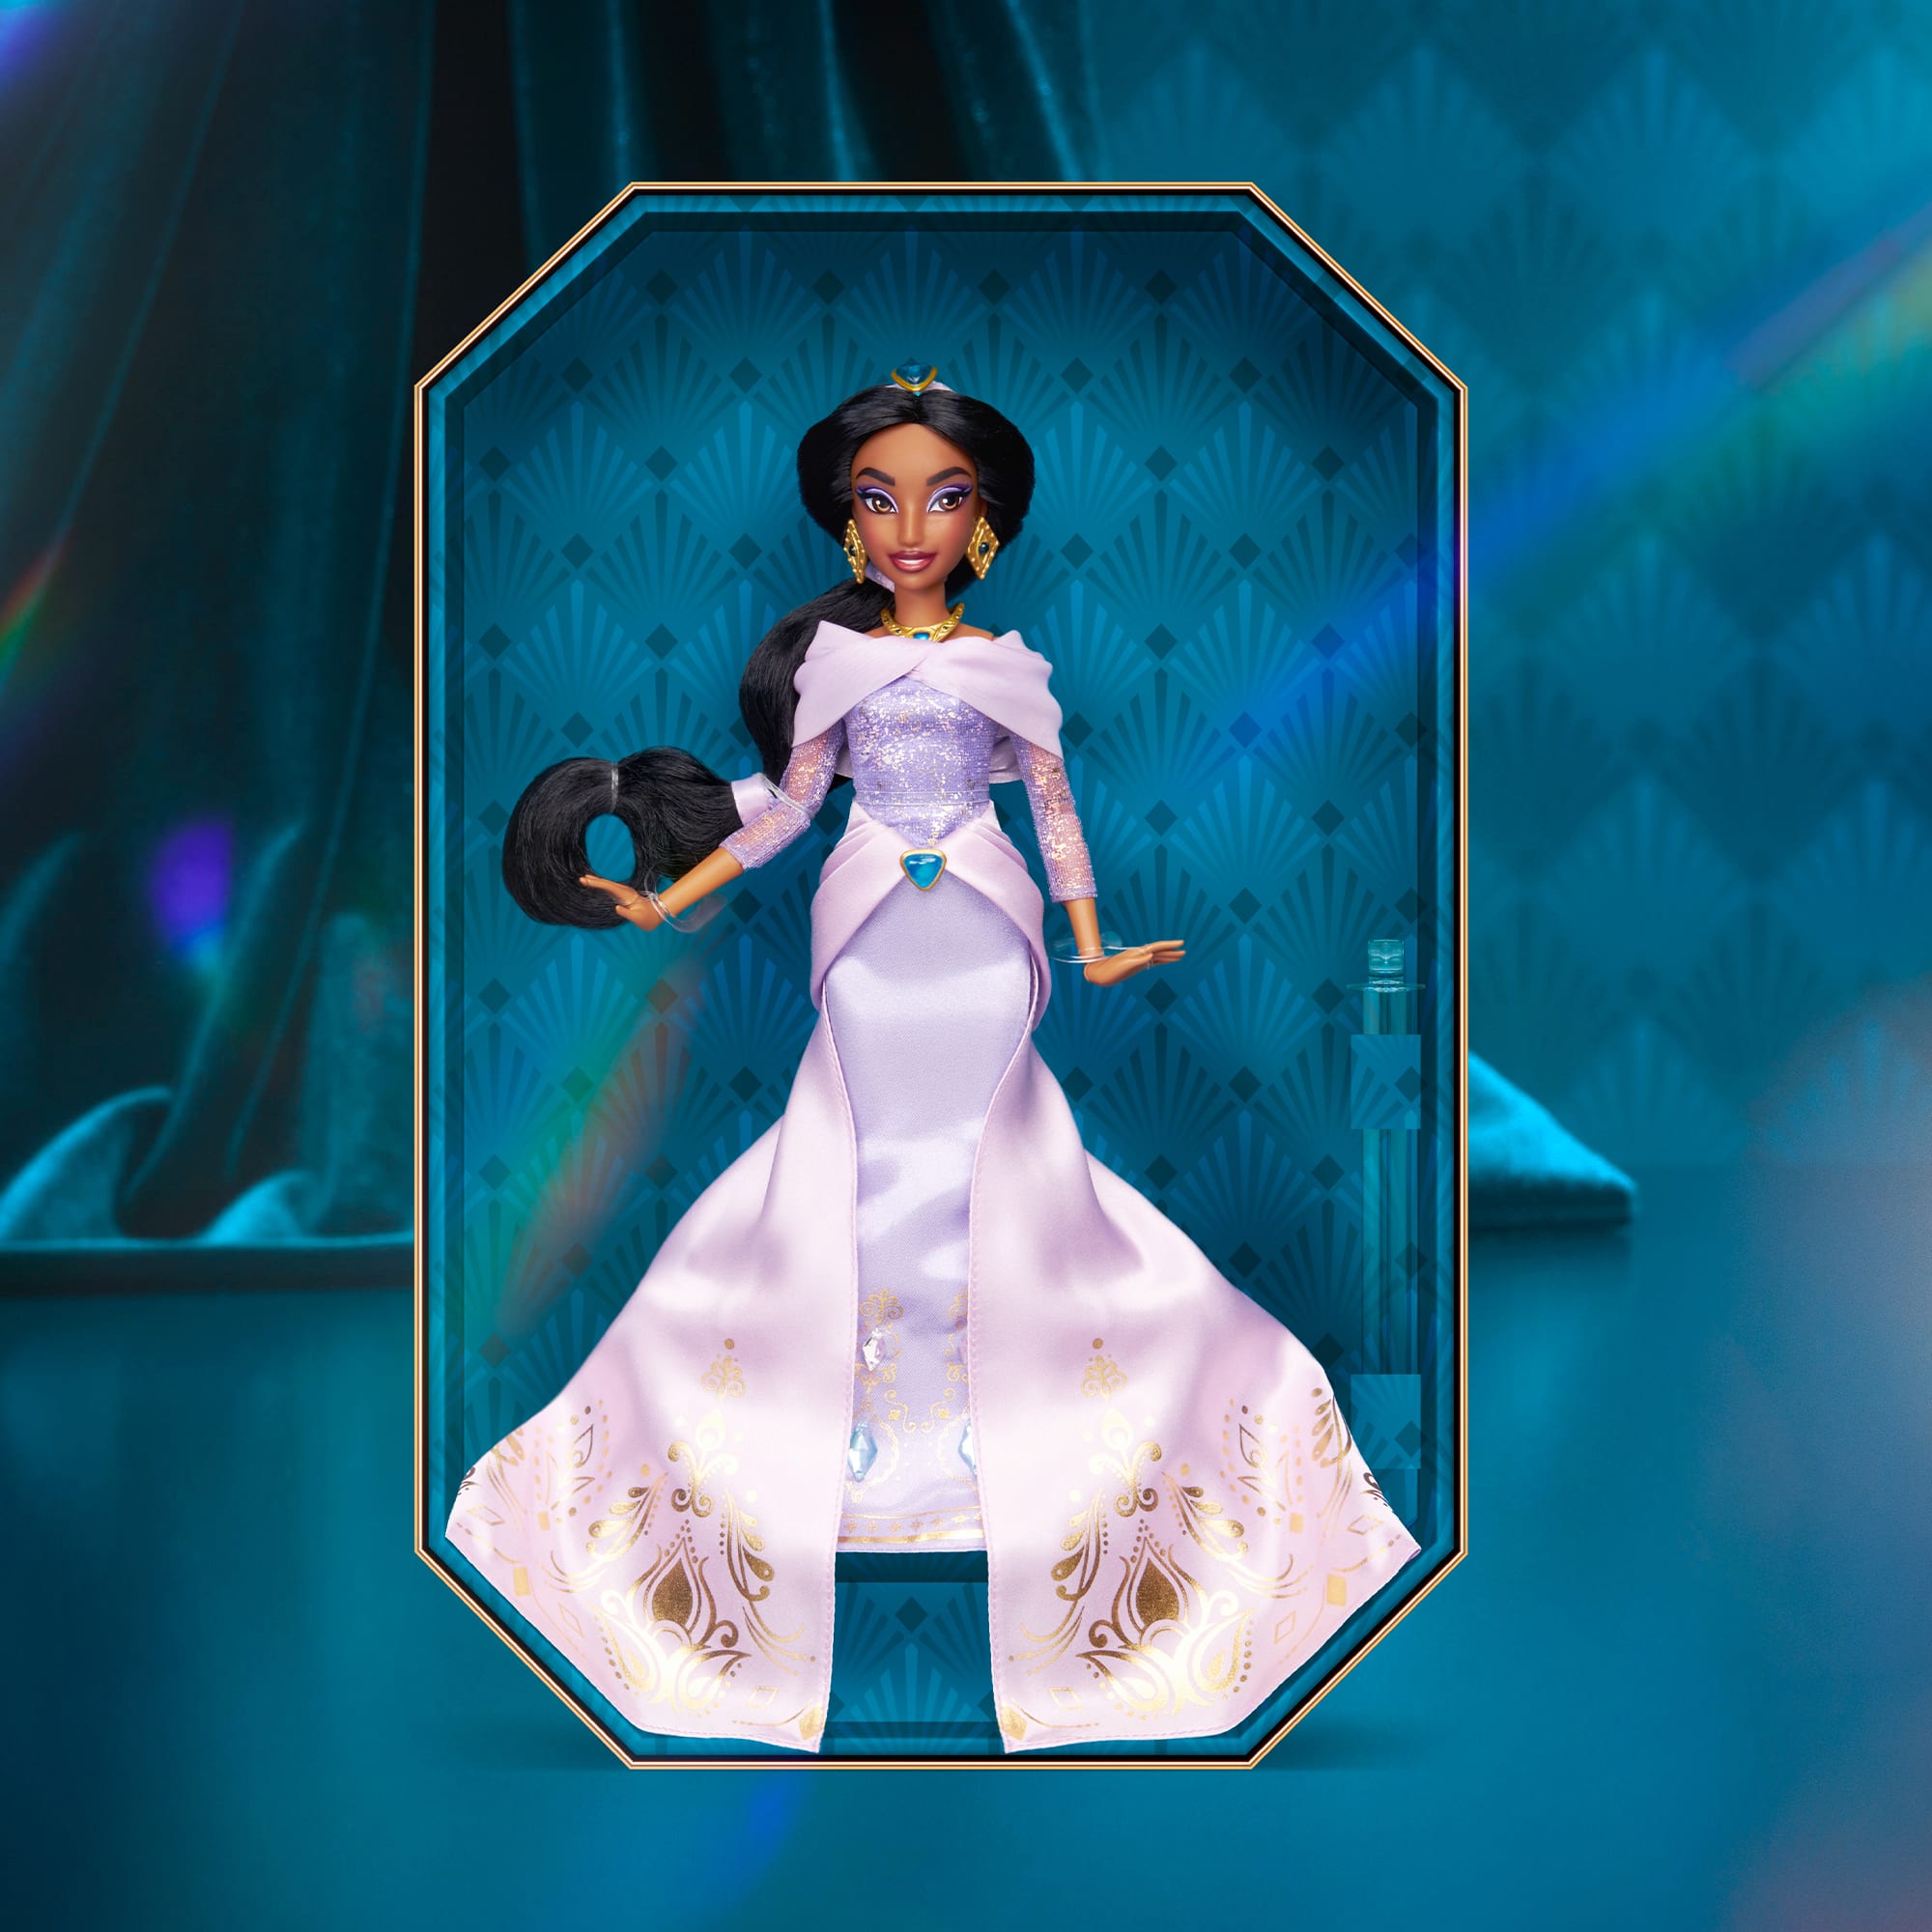 Mattel Disney Princess Radiance Collection dolls: Belle, Sleeping